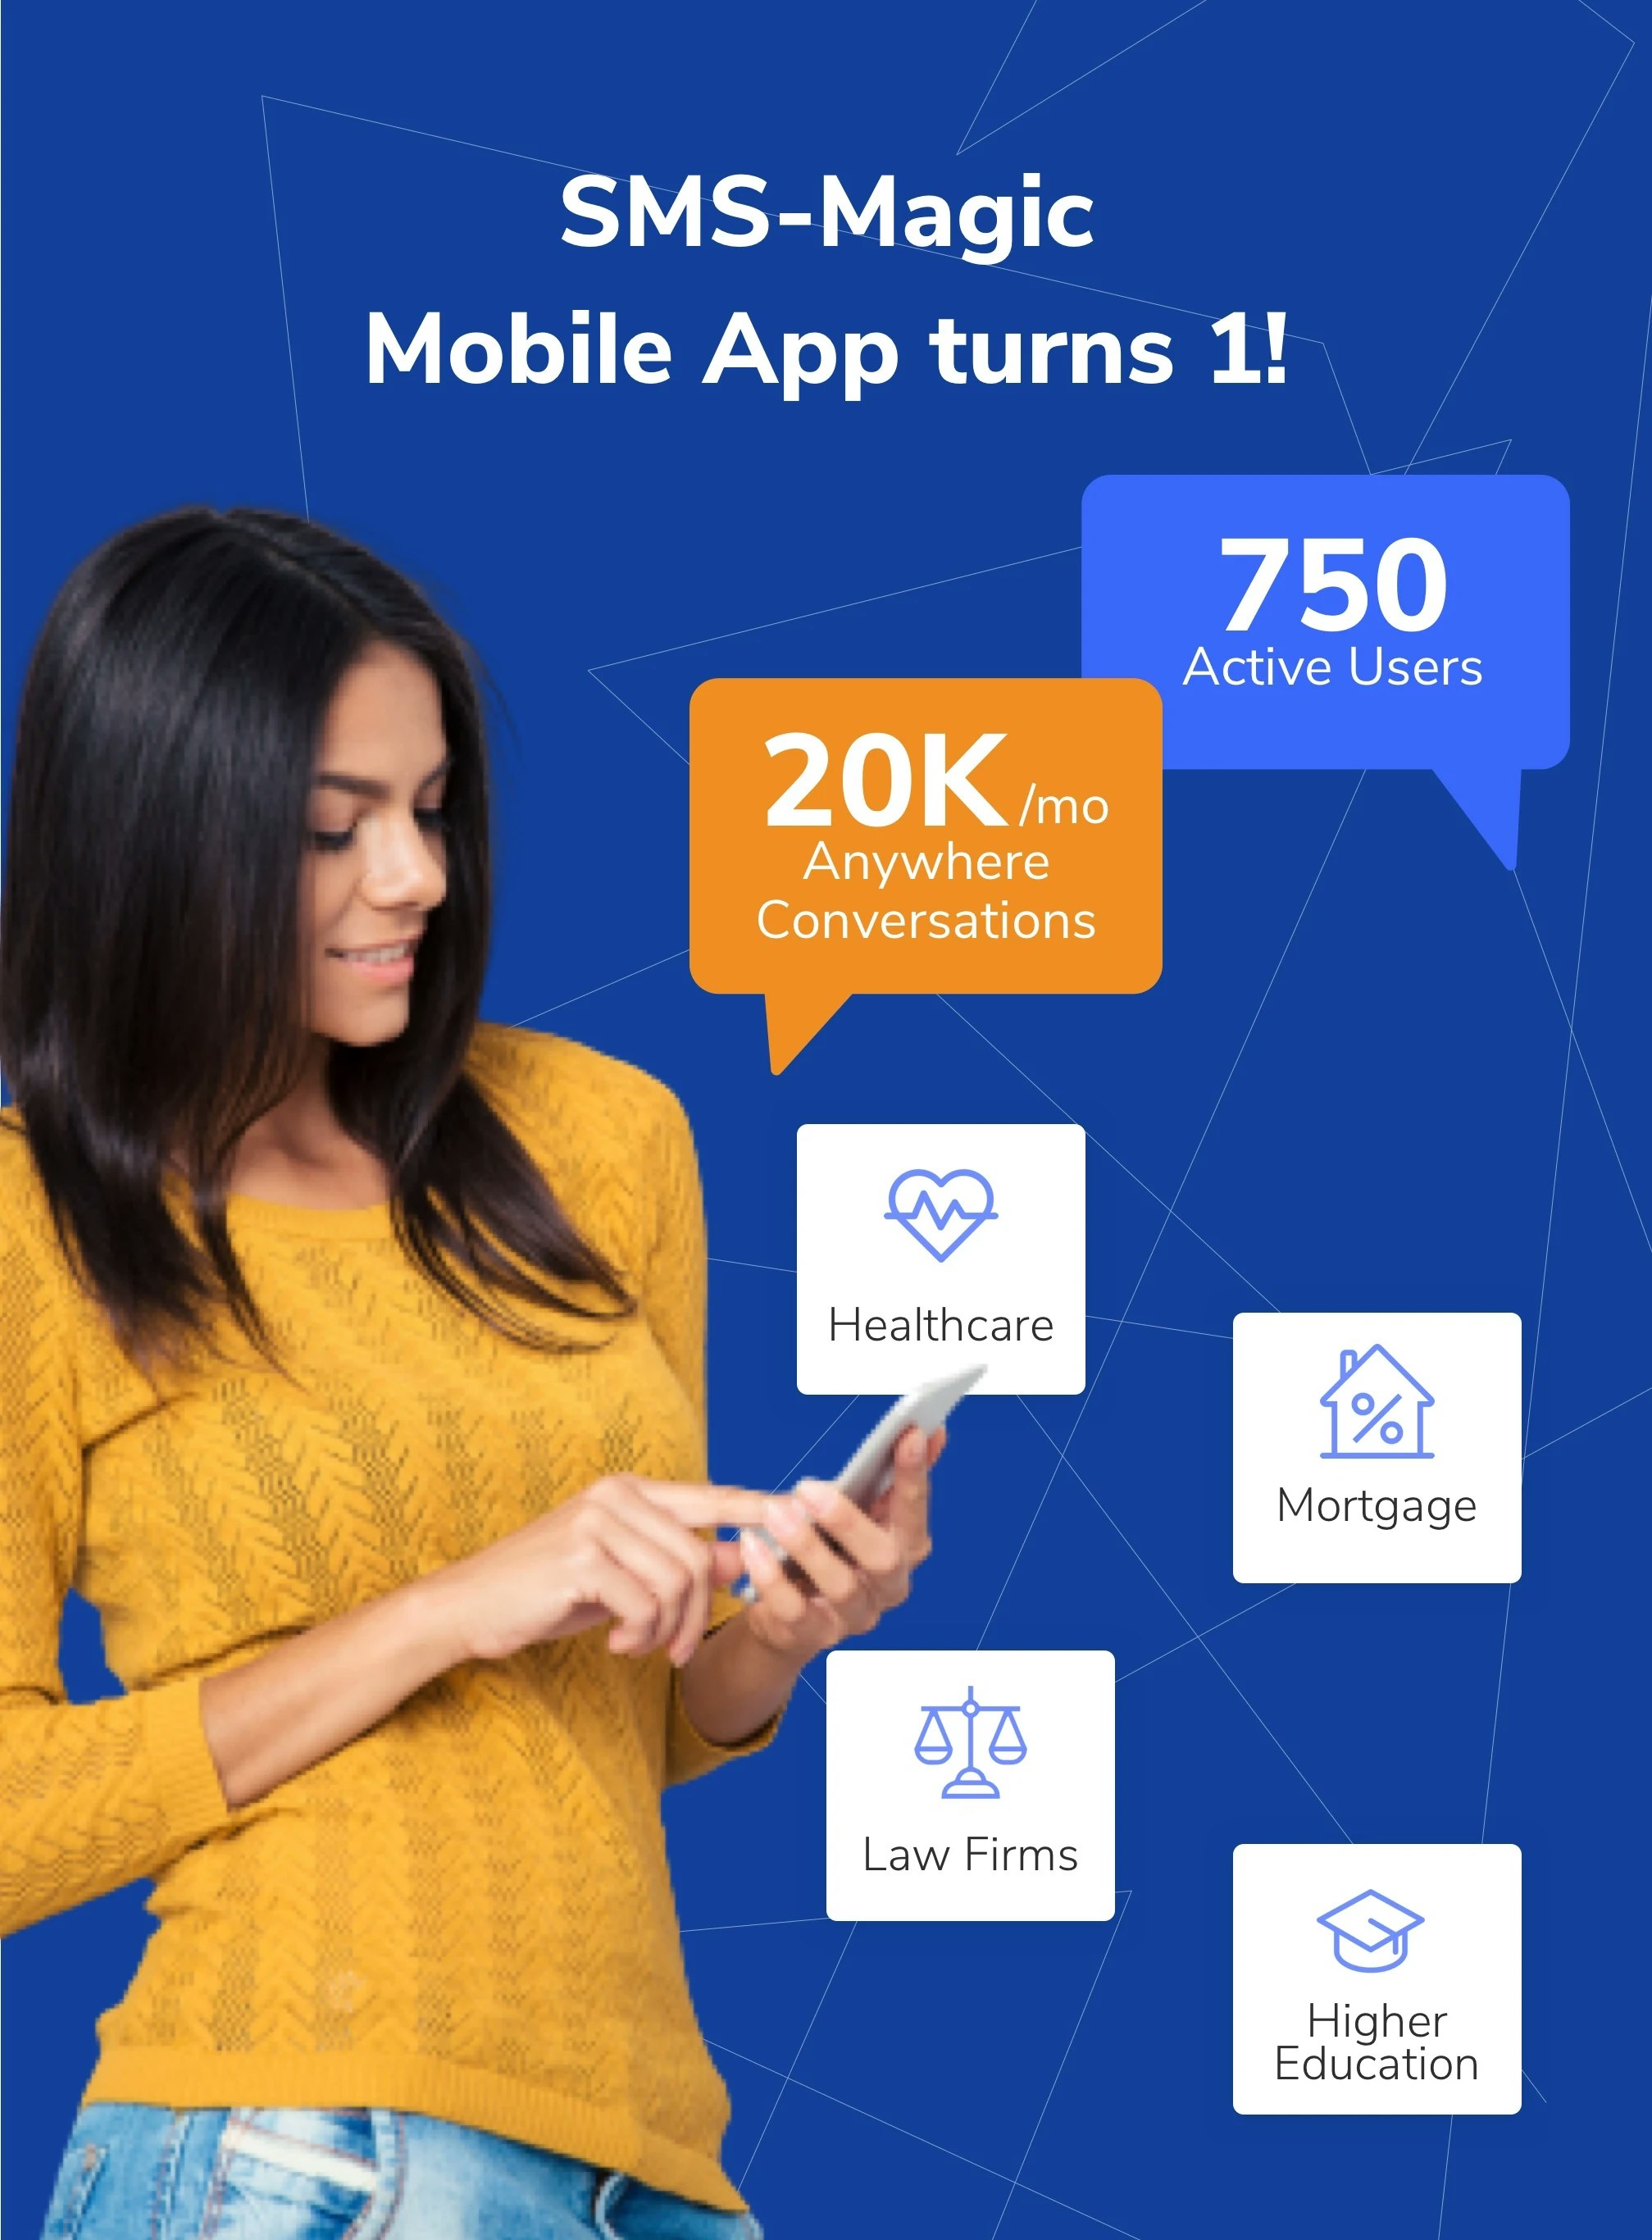 SMS-Magic Mobile App